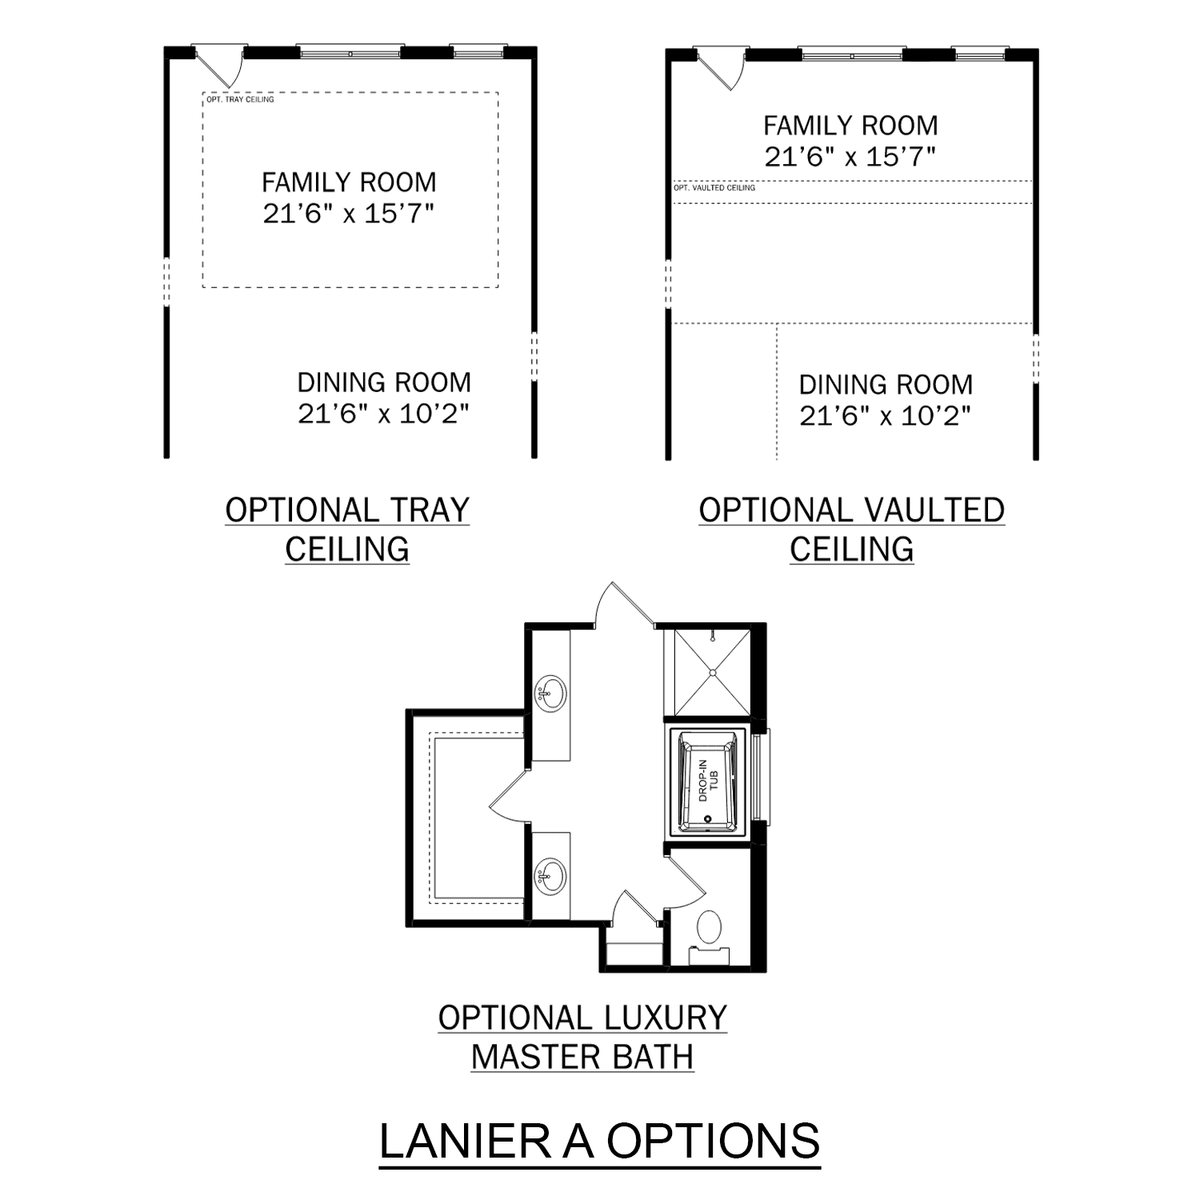 2 - The Lanier floor plan layout for 3012 Henry Road SE in Davidson Homes' River Road Estates community.